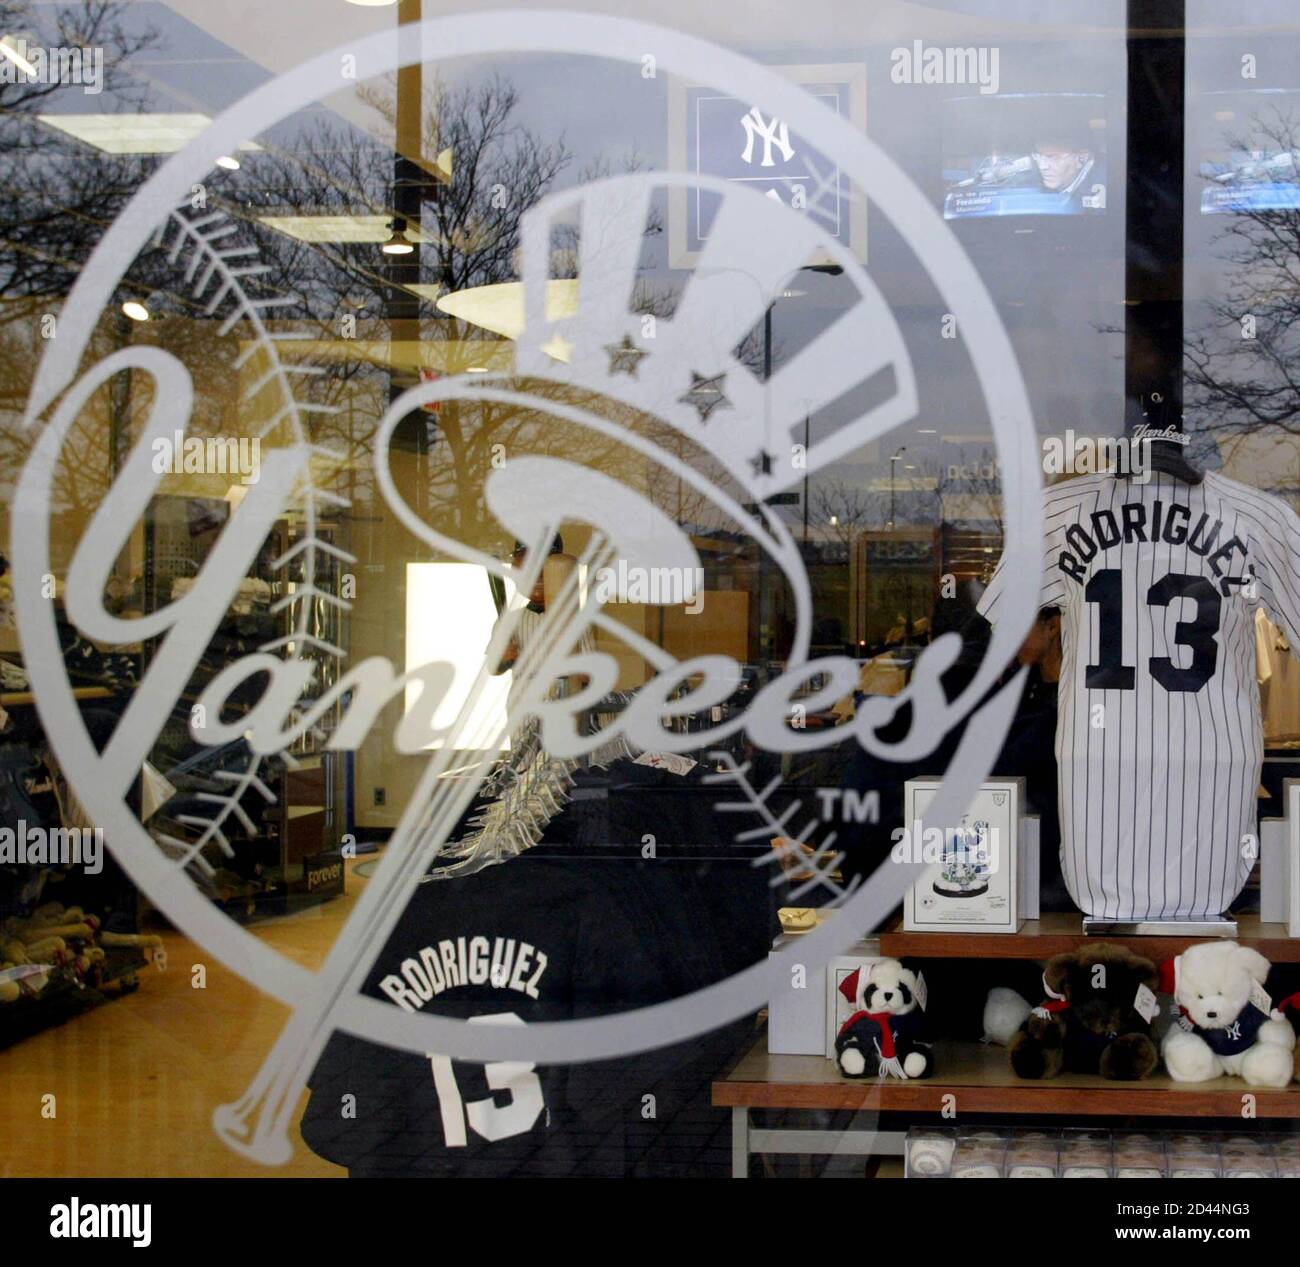 New York Yankees Team Store Banque d'image et photos - Alamy